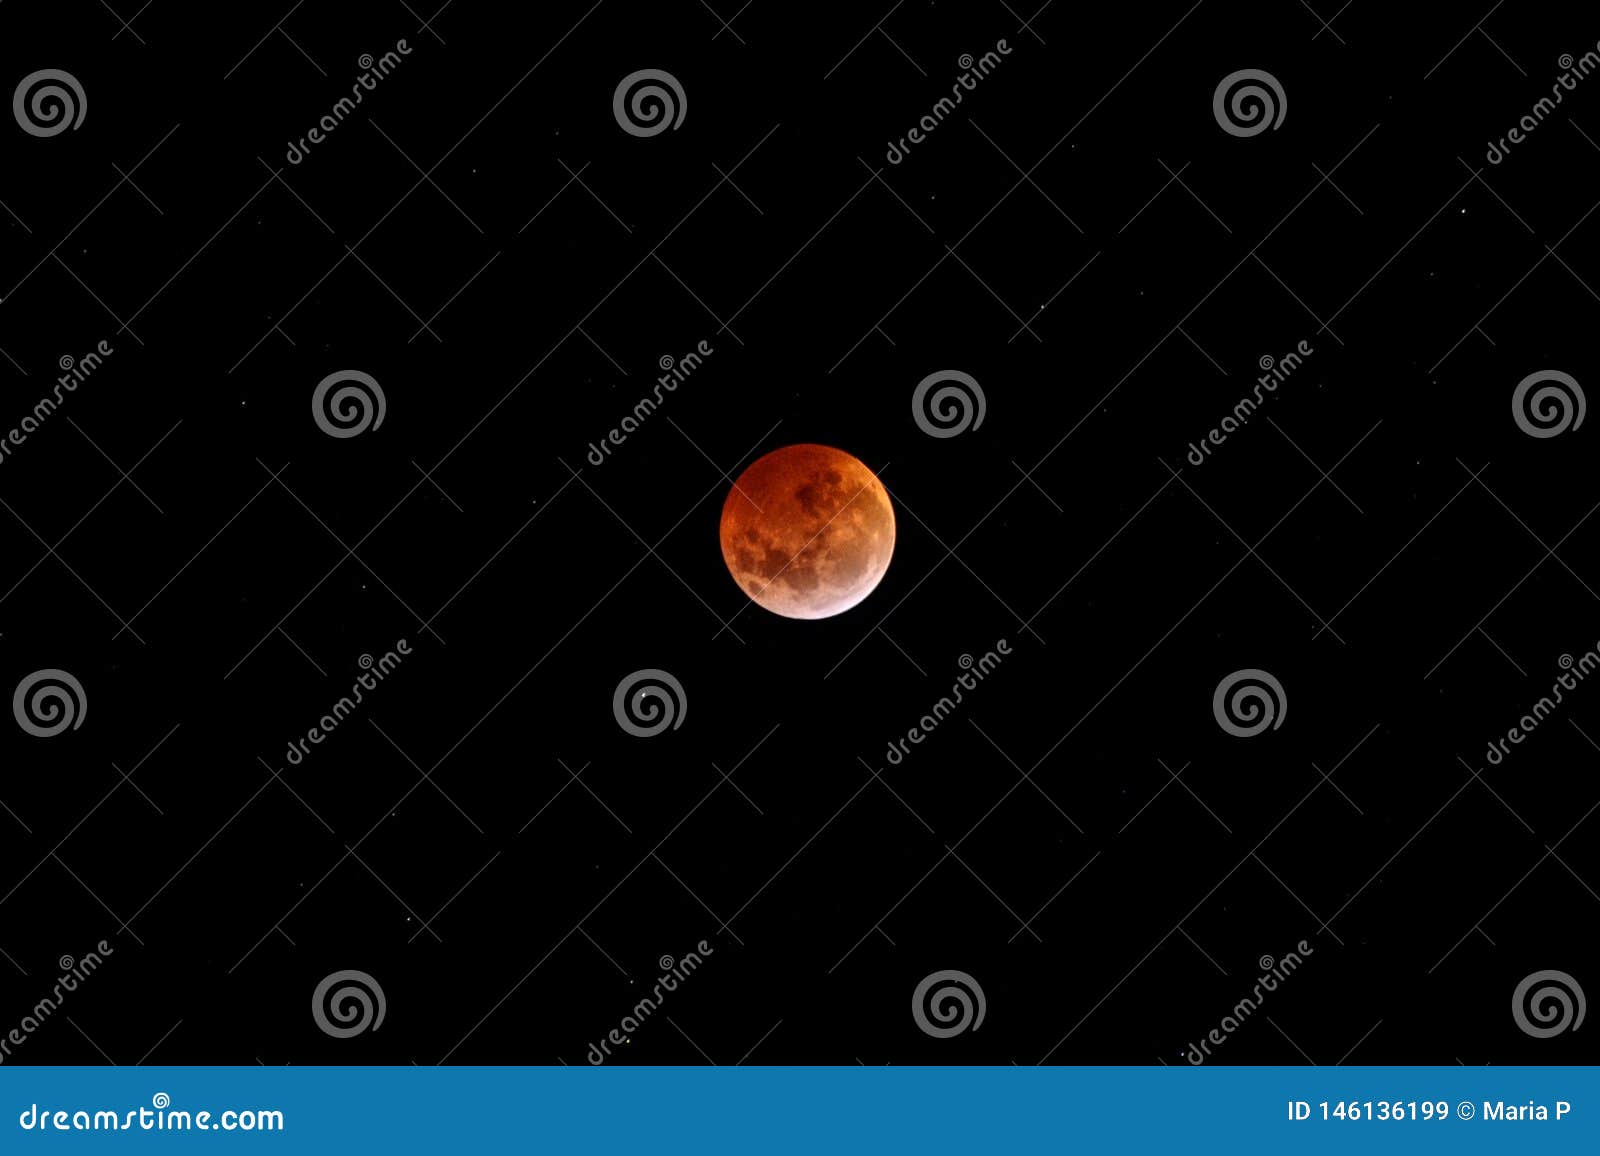 eclipse lunar red full moon in dark black sky at night